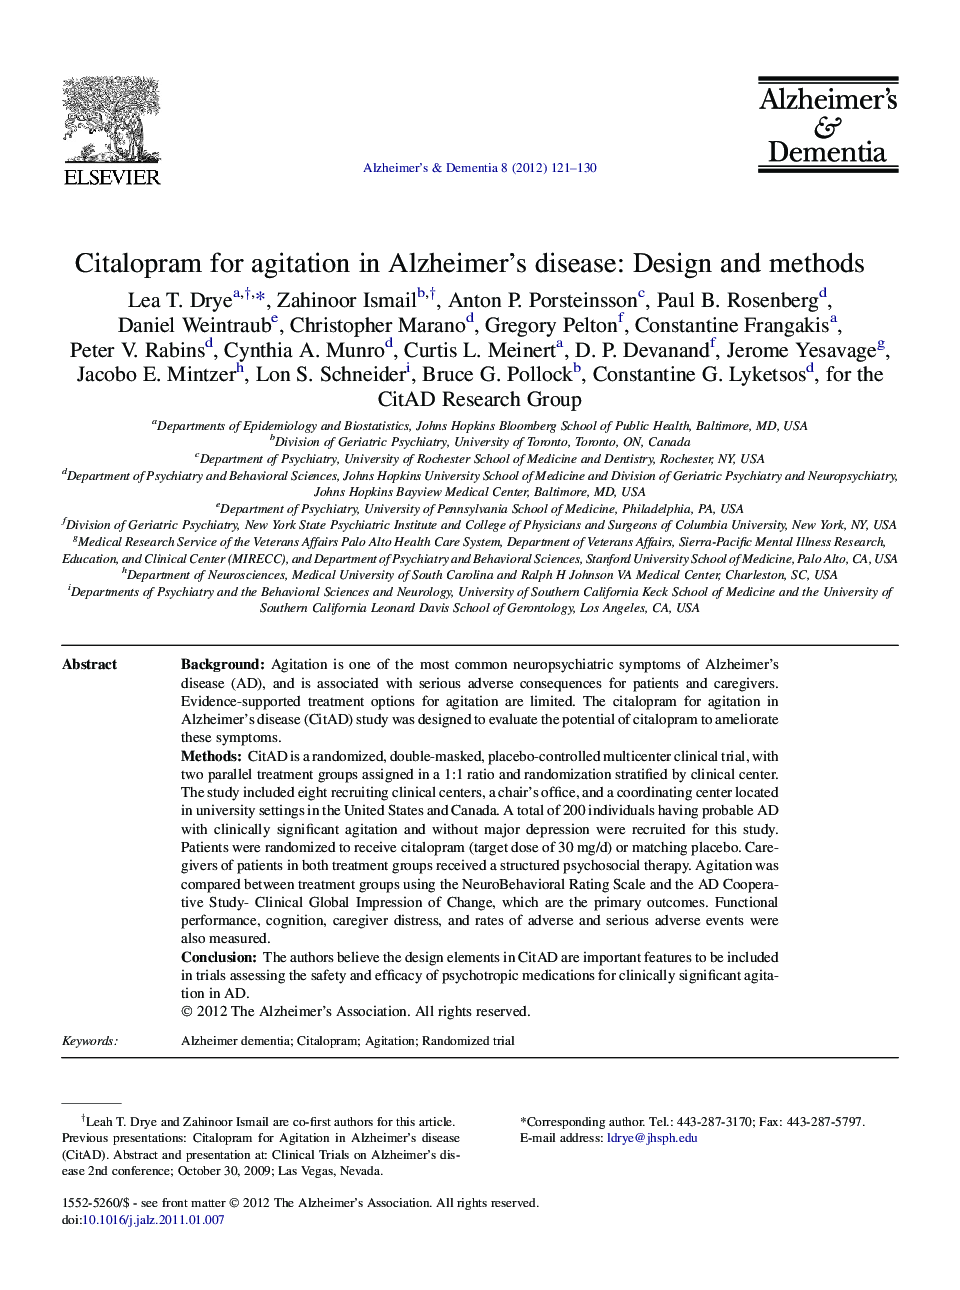 Featured ArticleCitalopram for agitation in Alzheimer's disease: Design and methods